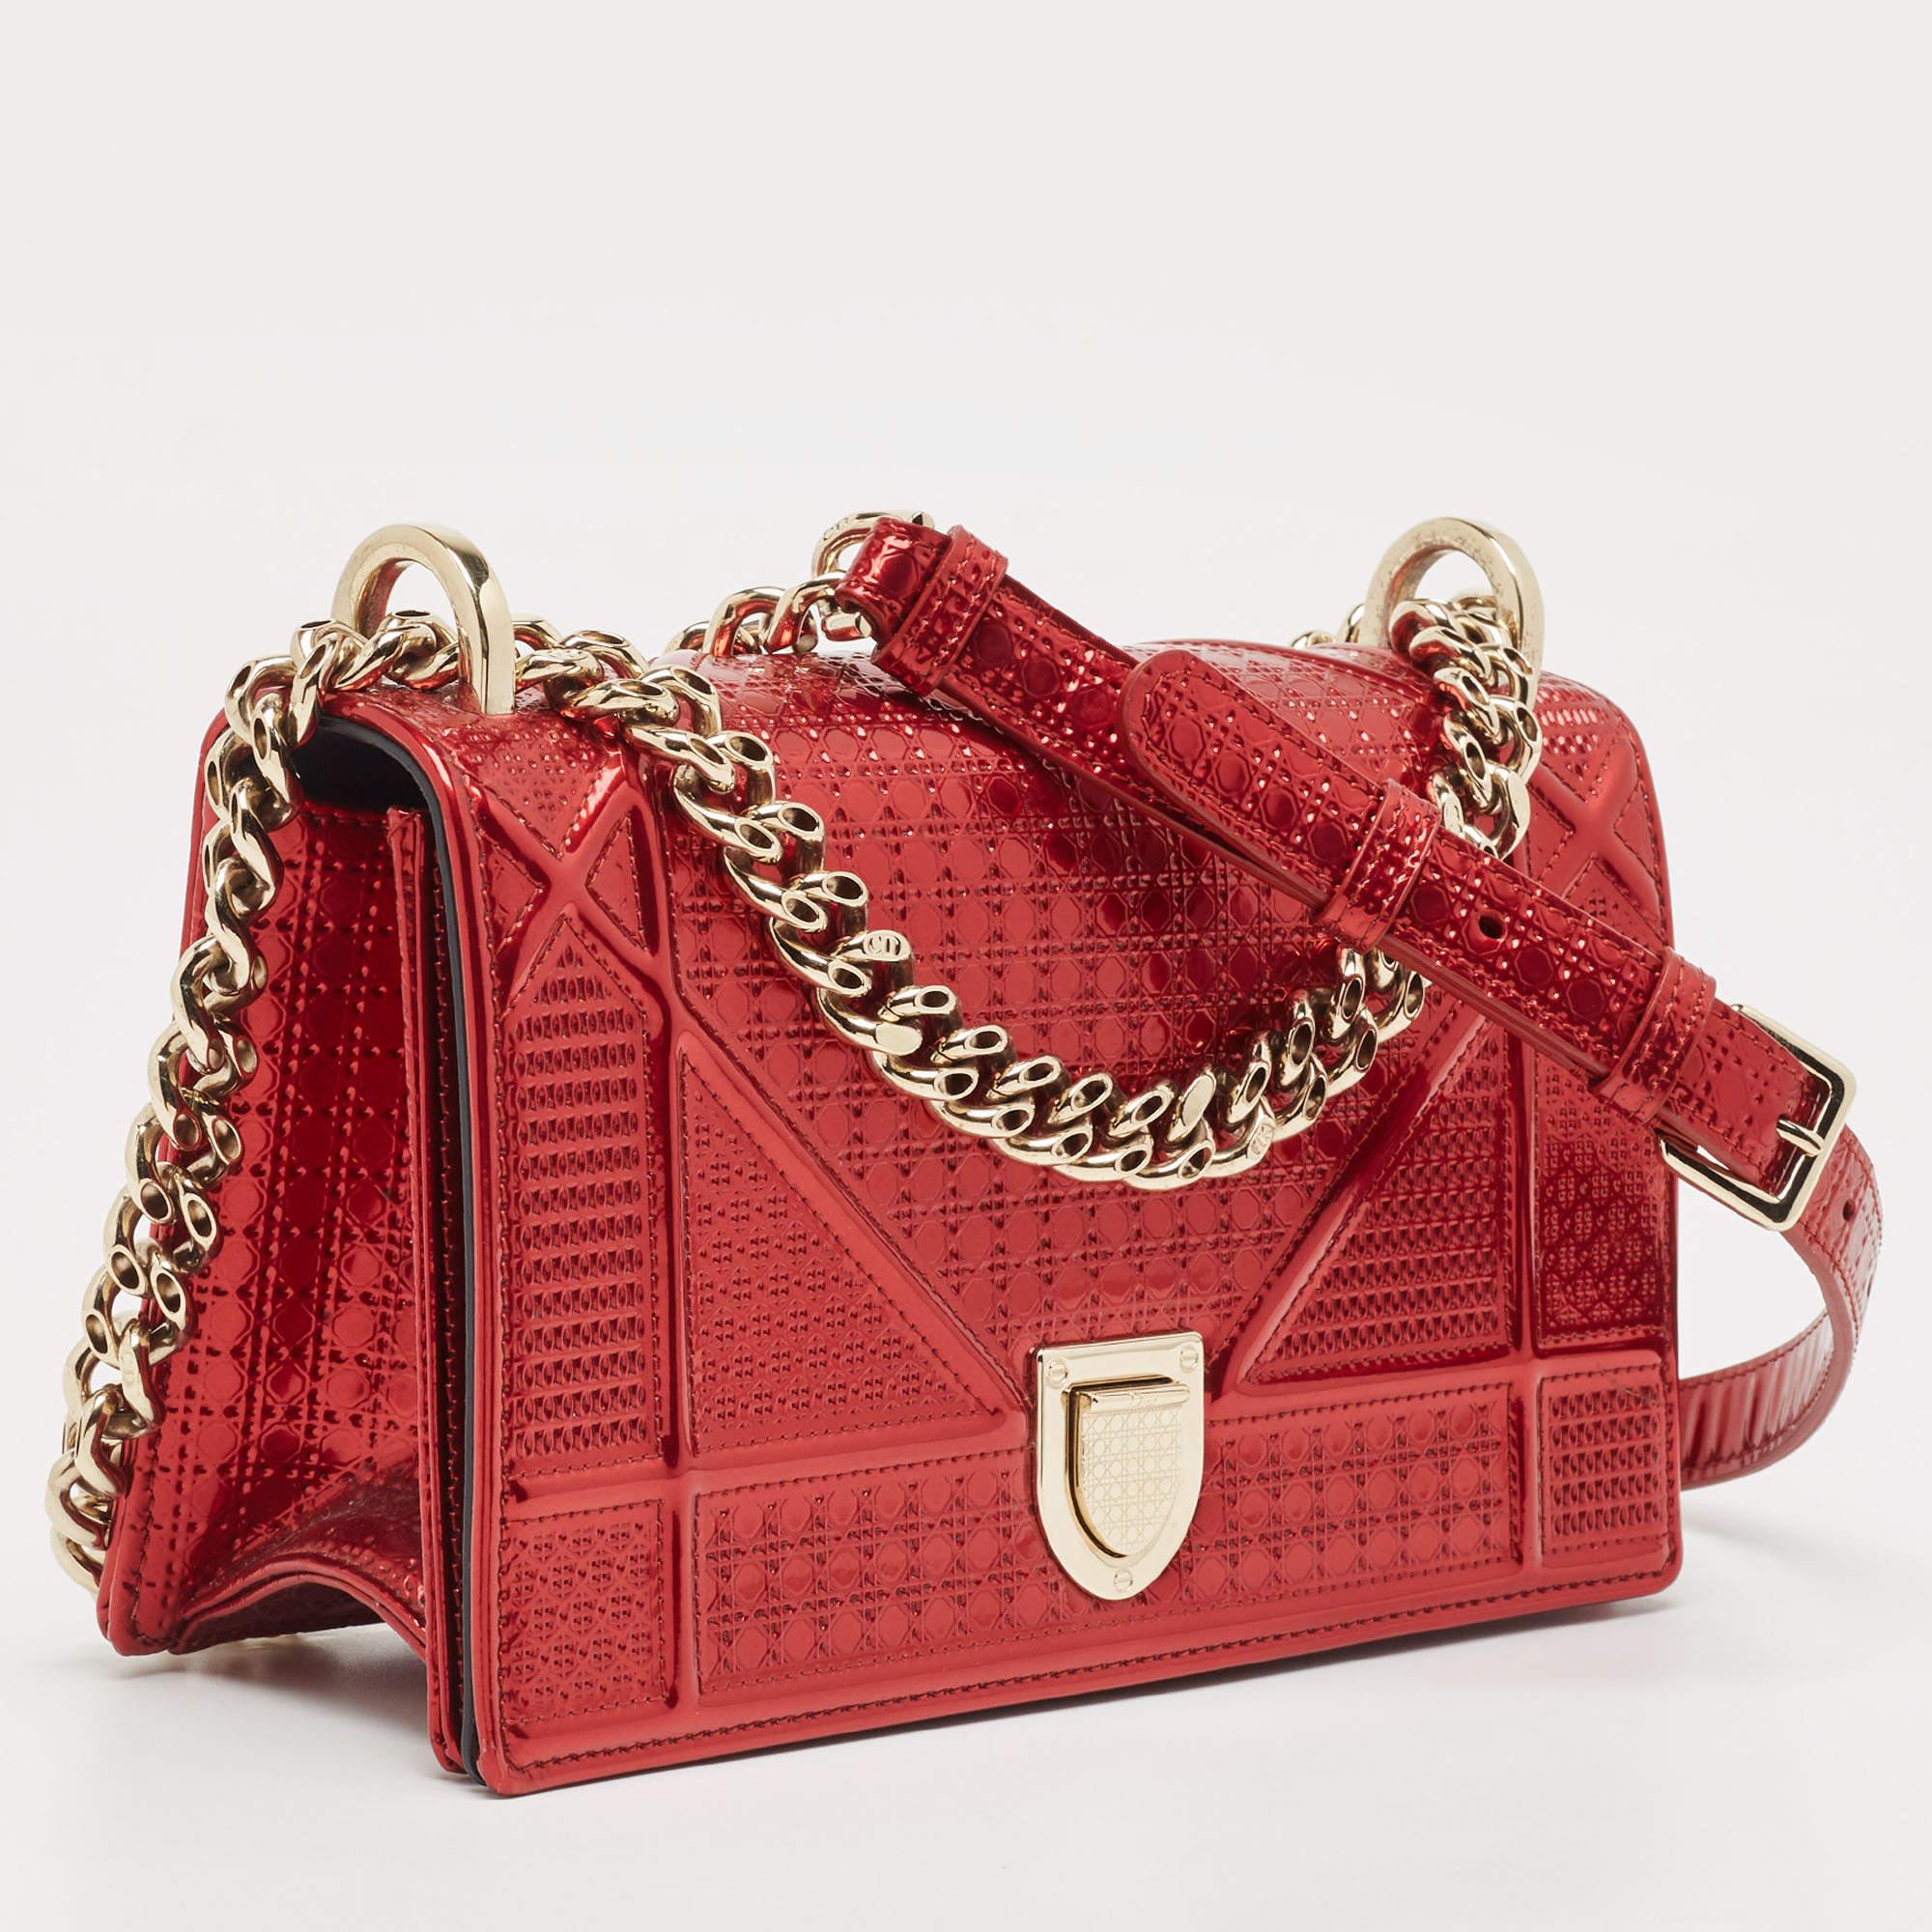 Dior Red Patent Leather Small Diorama Shoulder Bag In Good Condition For Sale In Dubai, Al Qouz 2